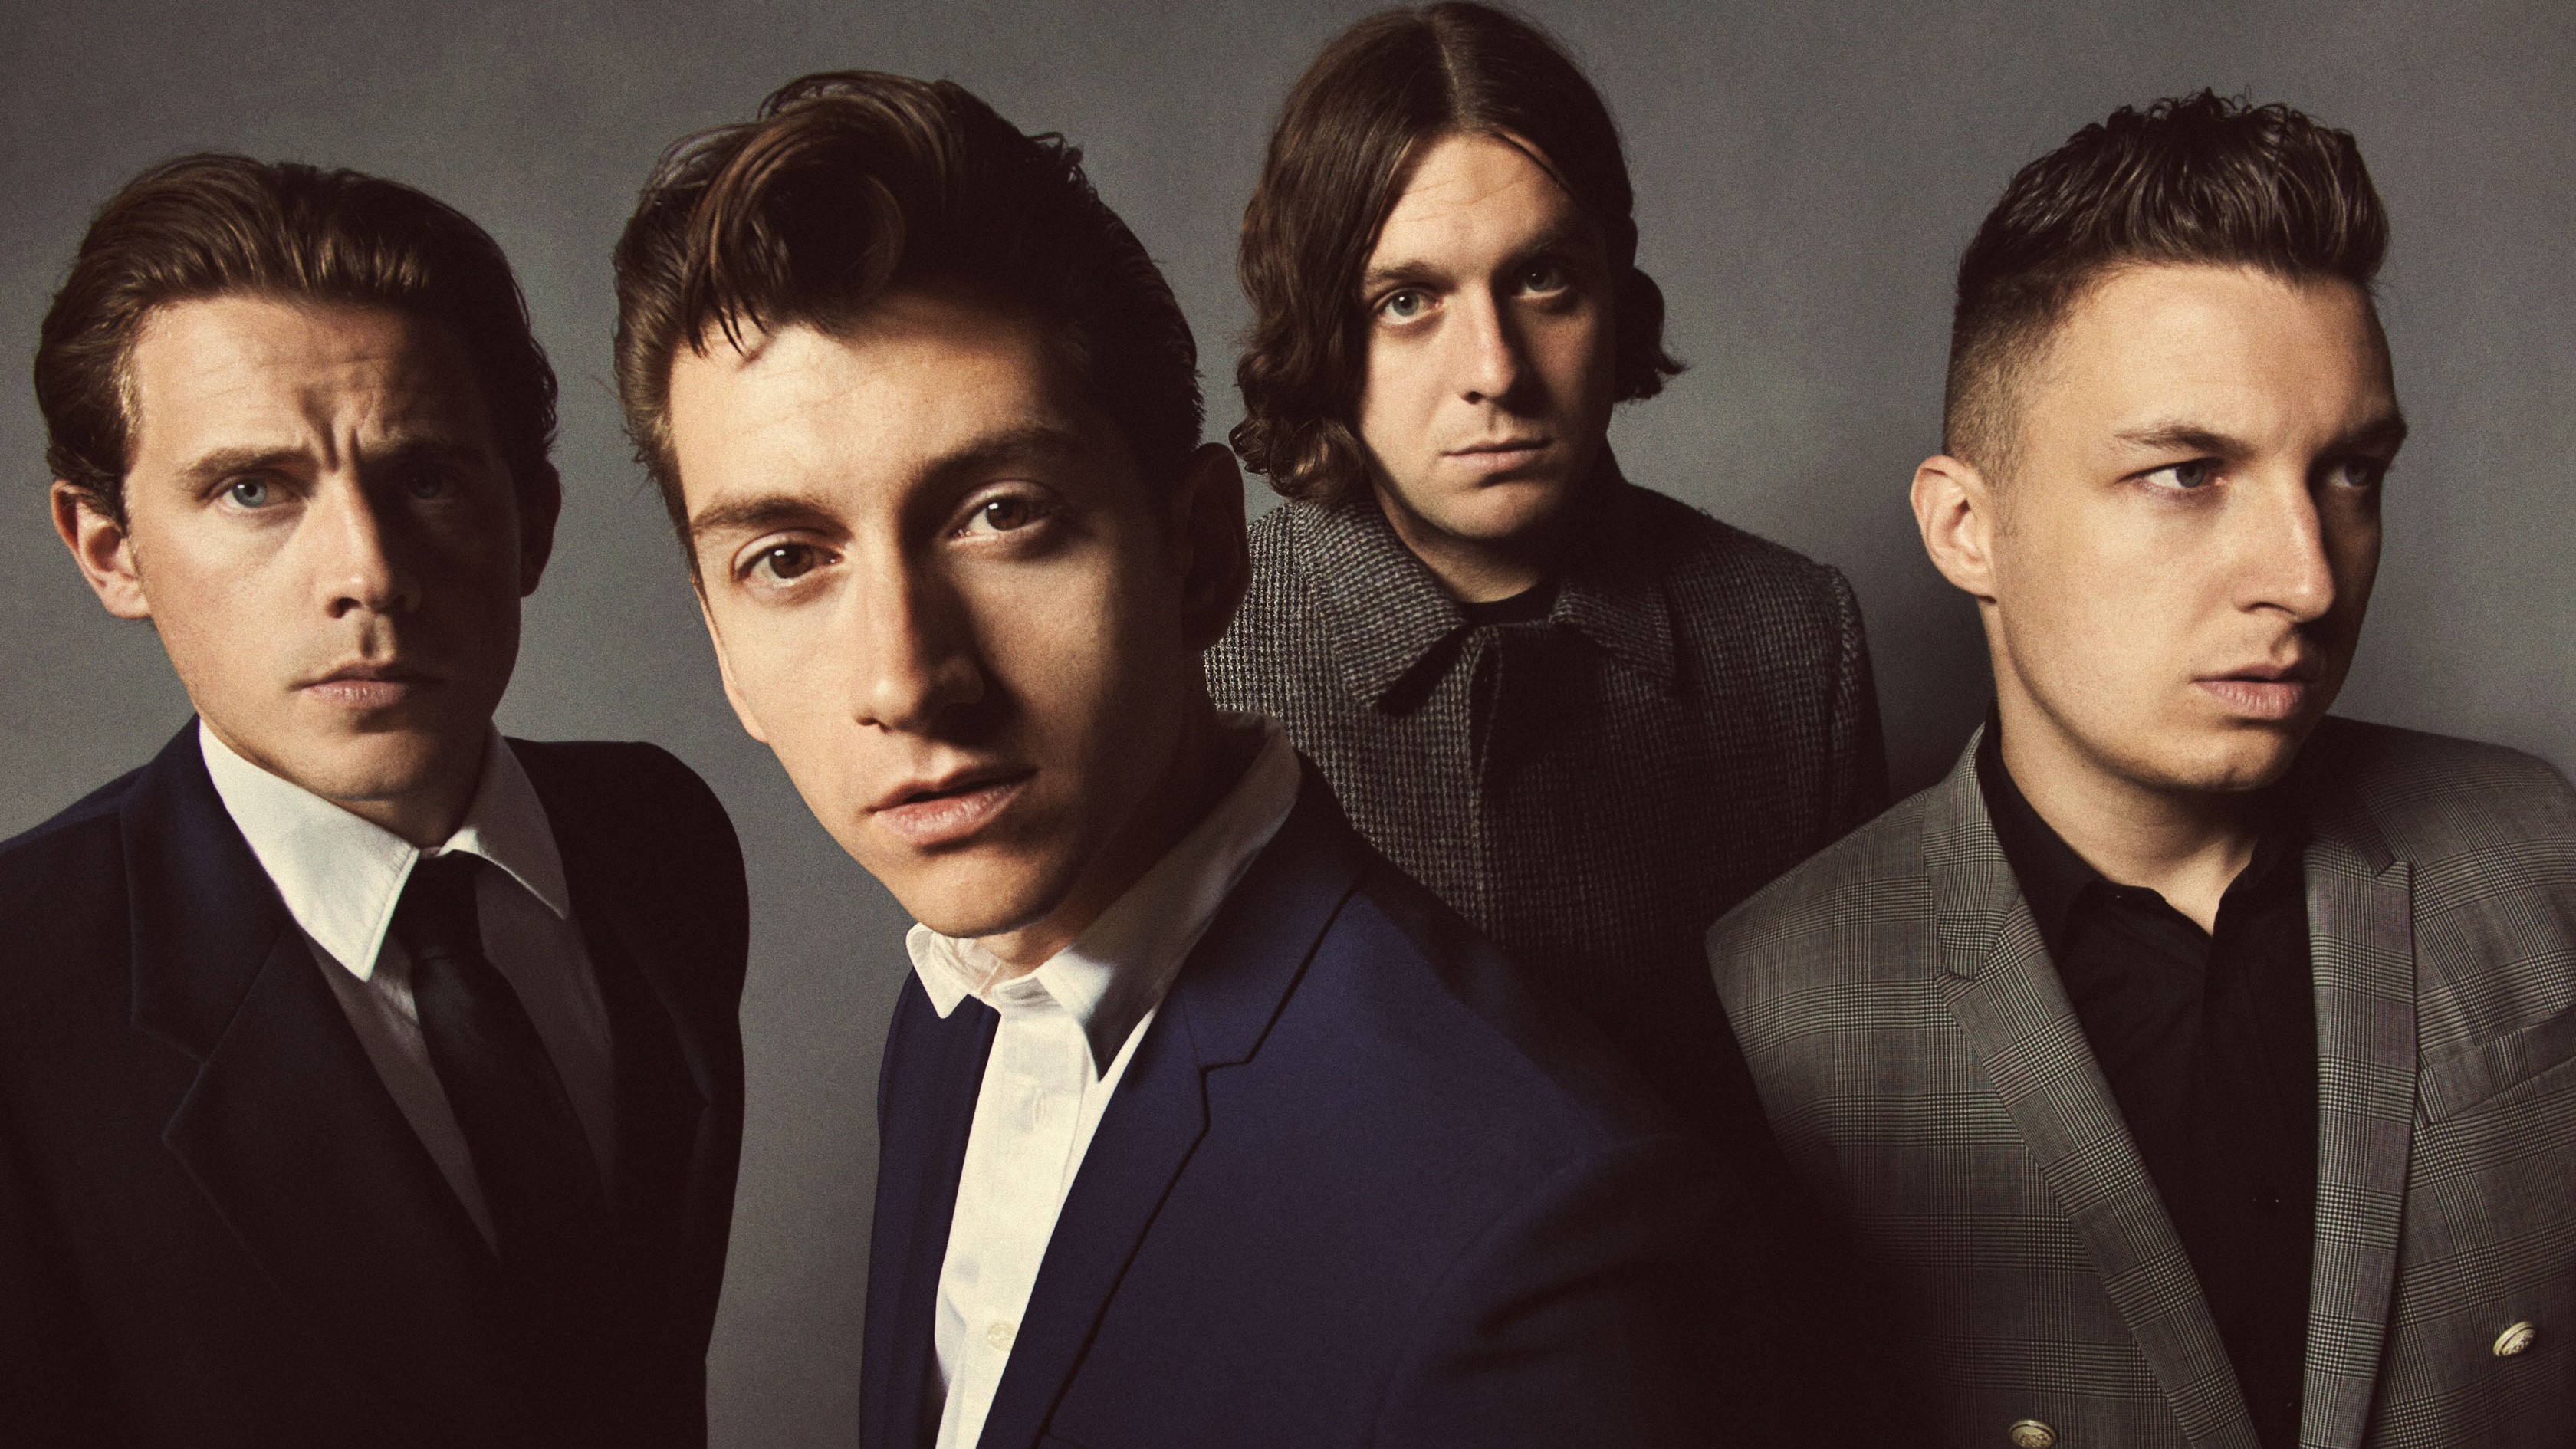 People 3360x1890 Arctic Monkeys men tie music group of men men indoors looking at viewer band